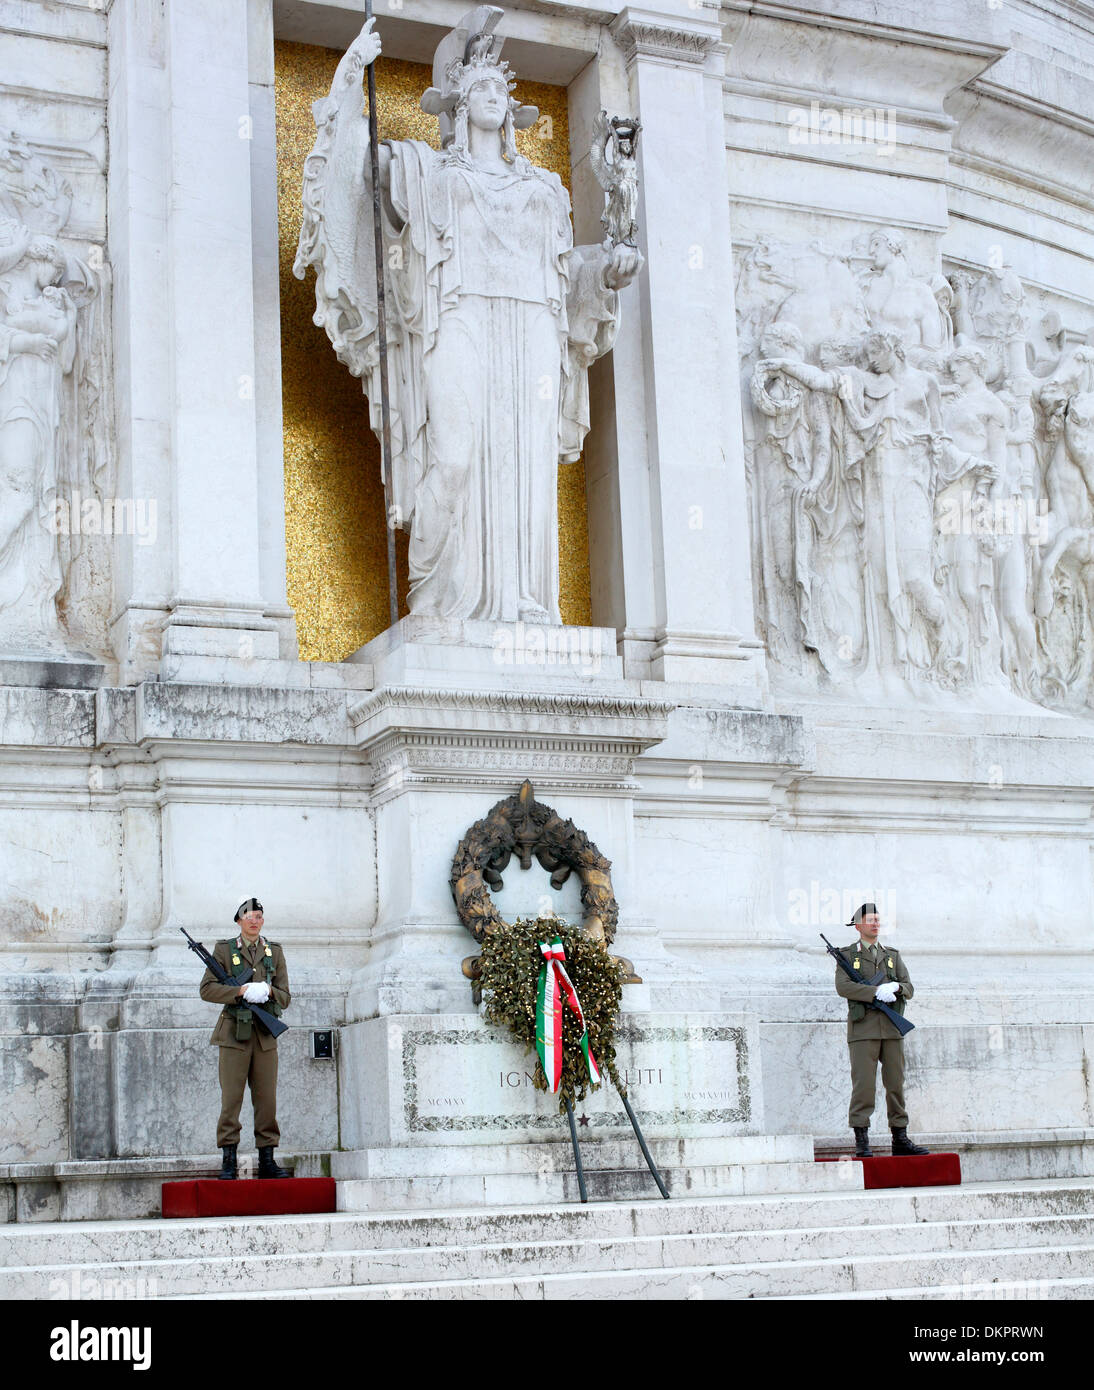 Tombe du Soldat inconnu, l'Altare della Patria, Piazza Venezia, Rome, Italie Banque D'Images